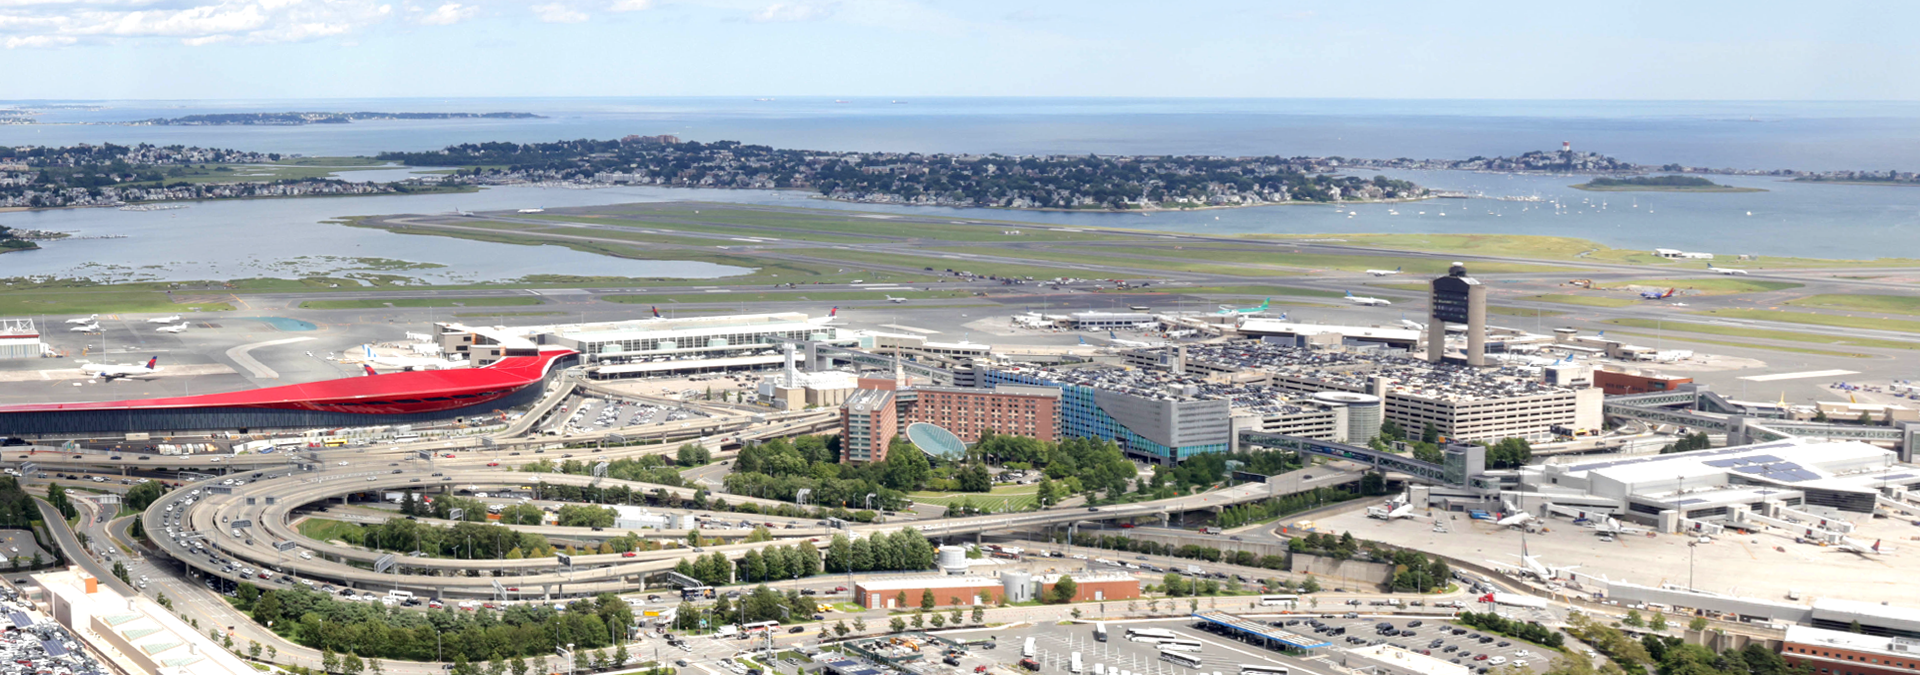 Boston Logan aerial view